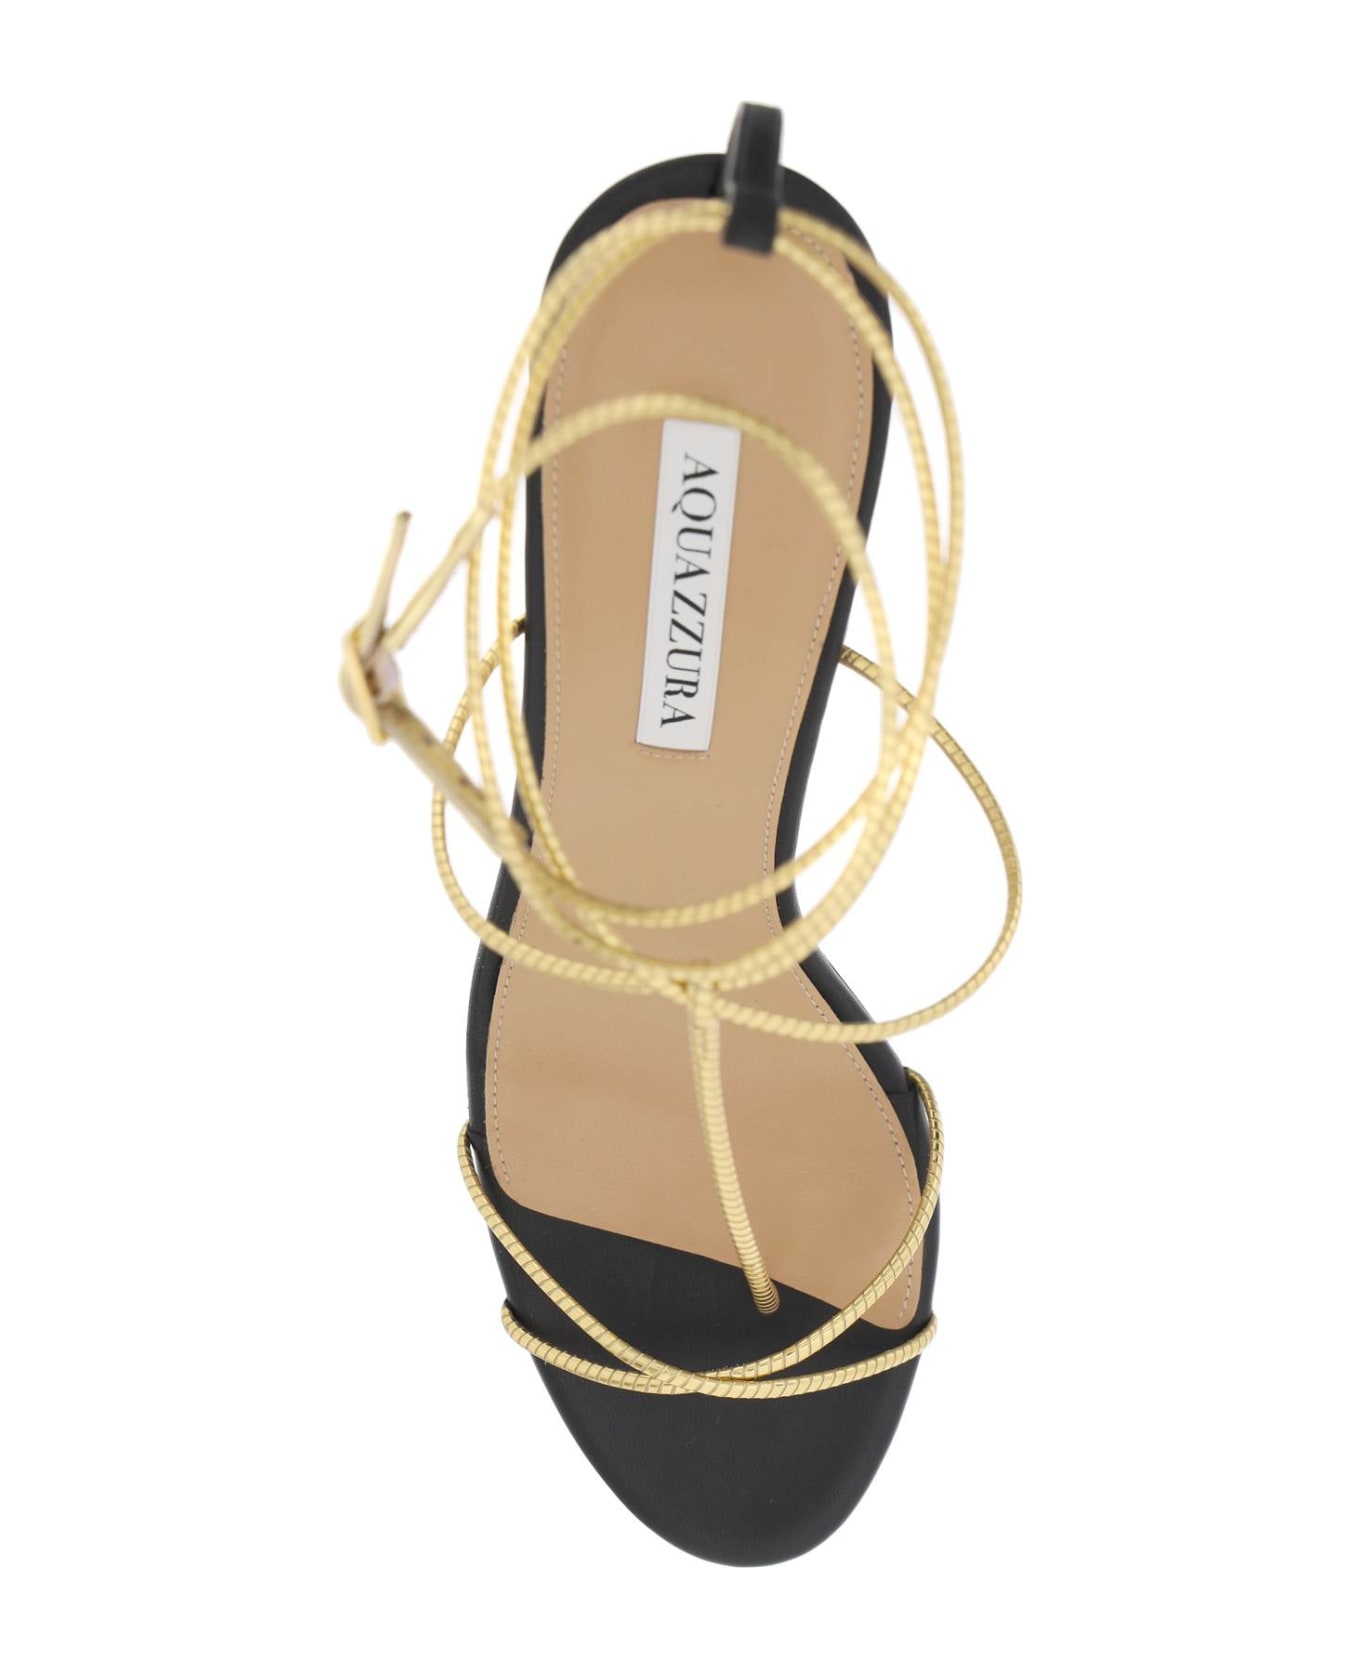 Aquazzura Roman Romance Sandals - GOLD BLACK (Gold)